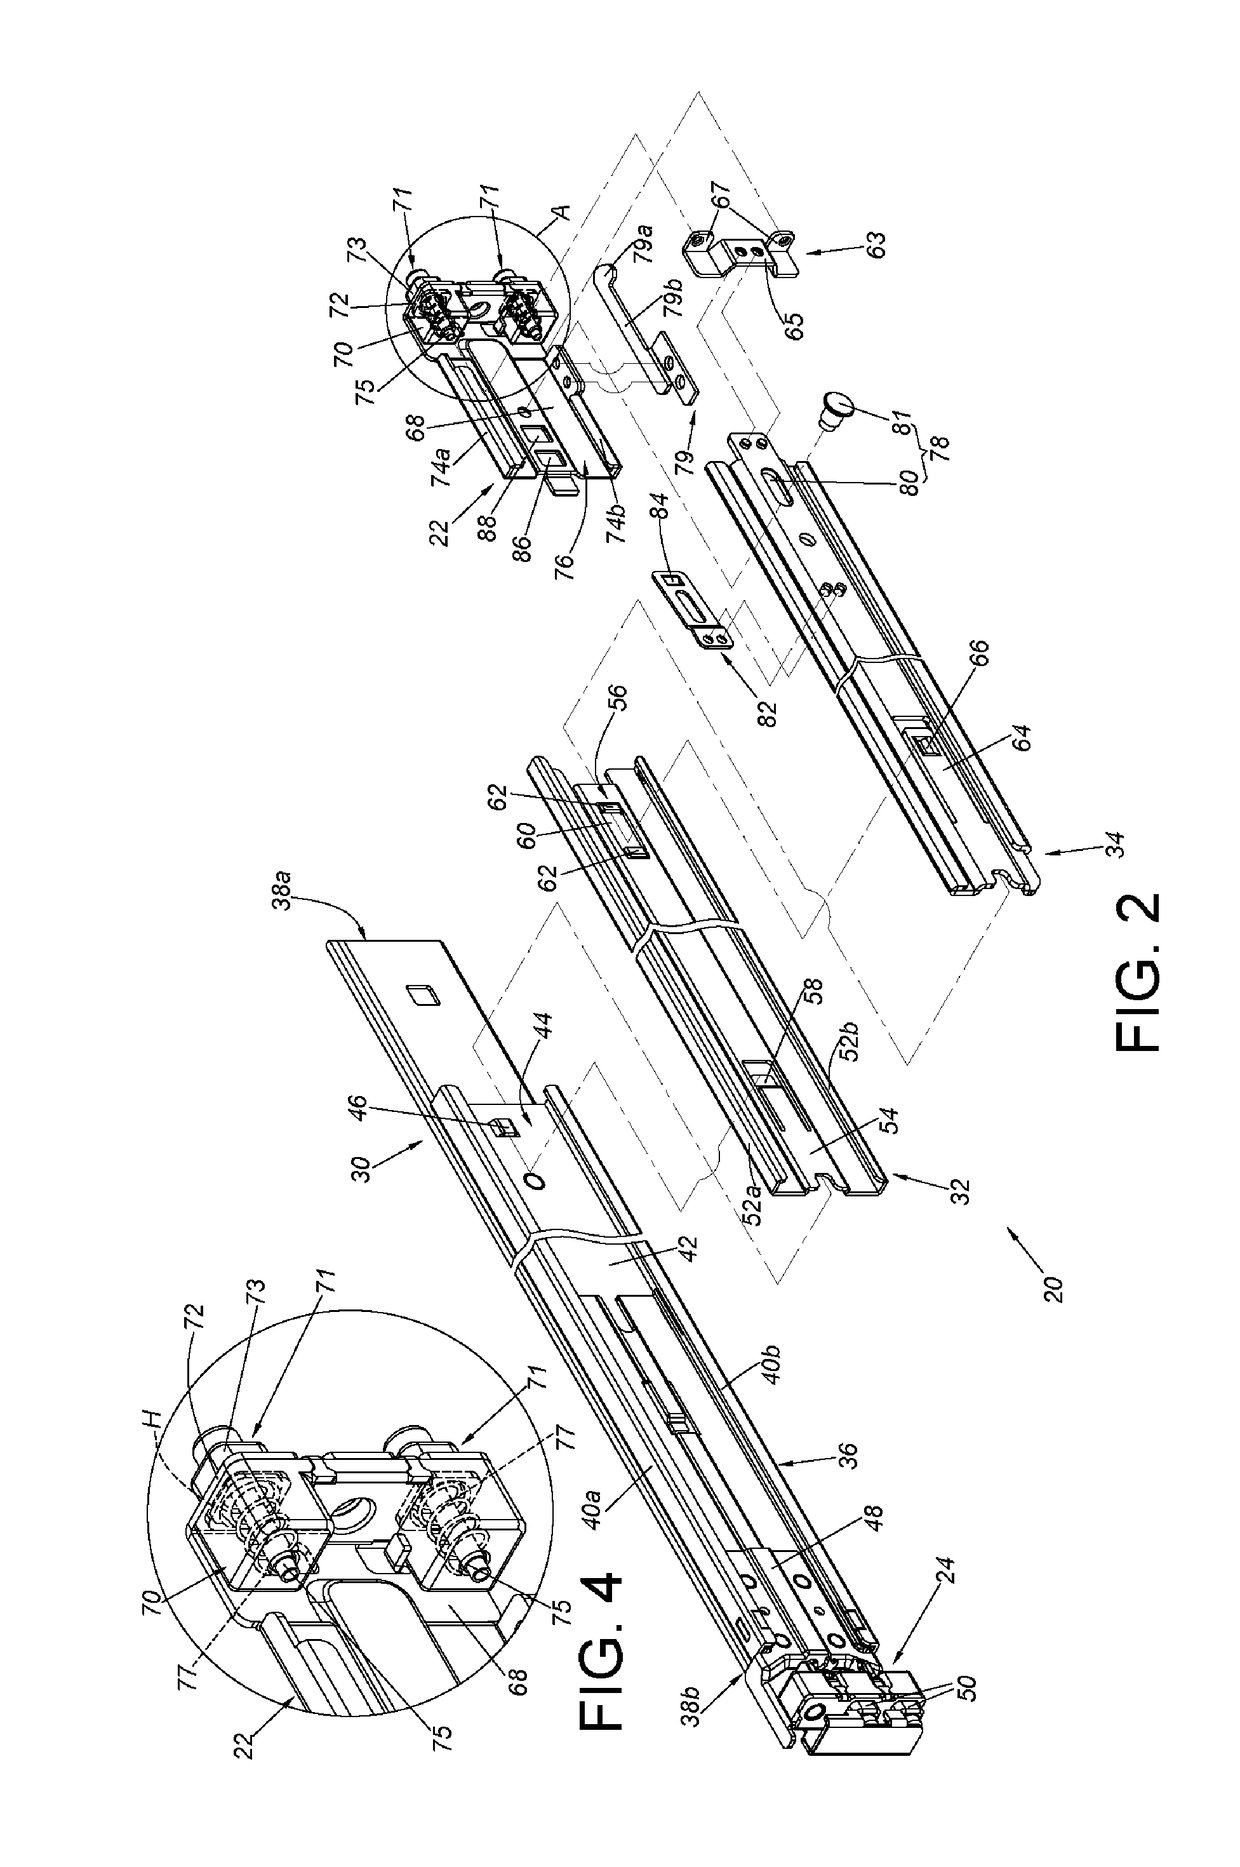 Slide rail mechanism and bracket device thereof